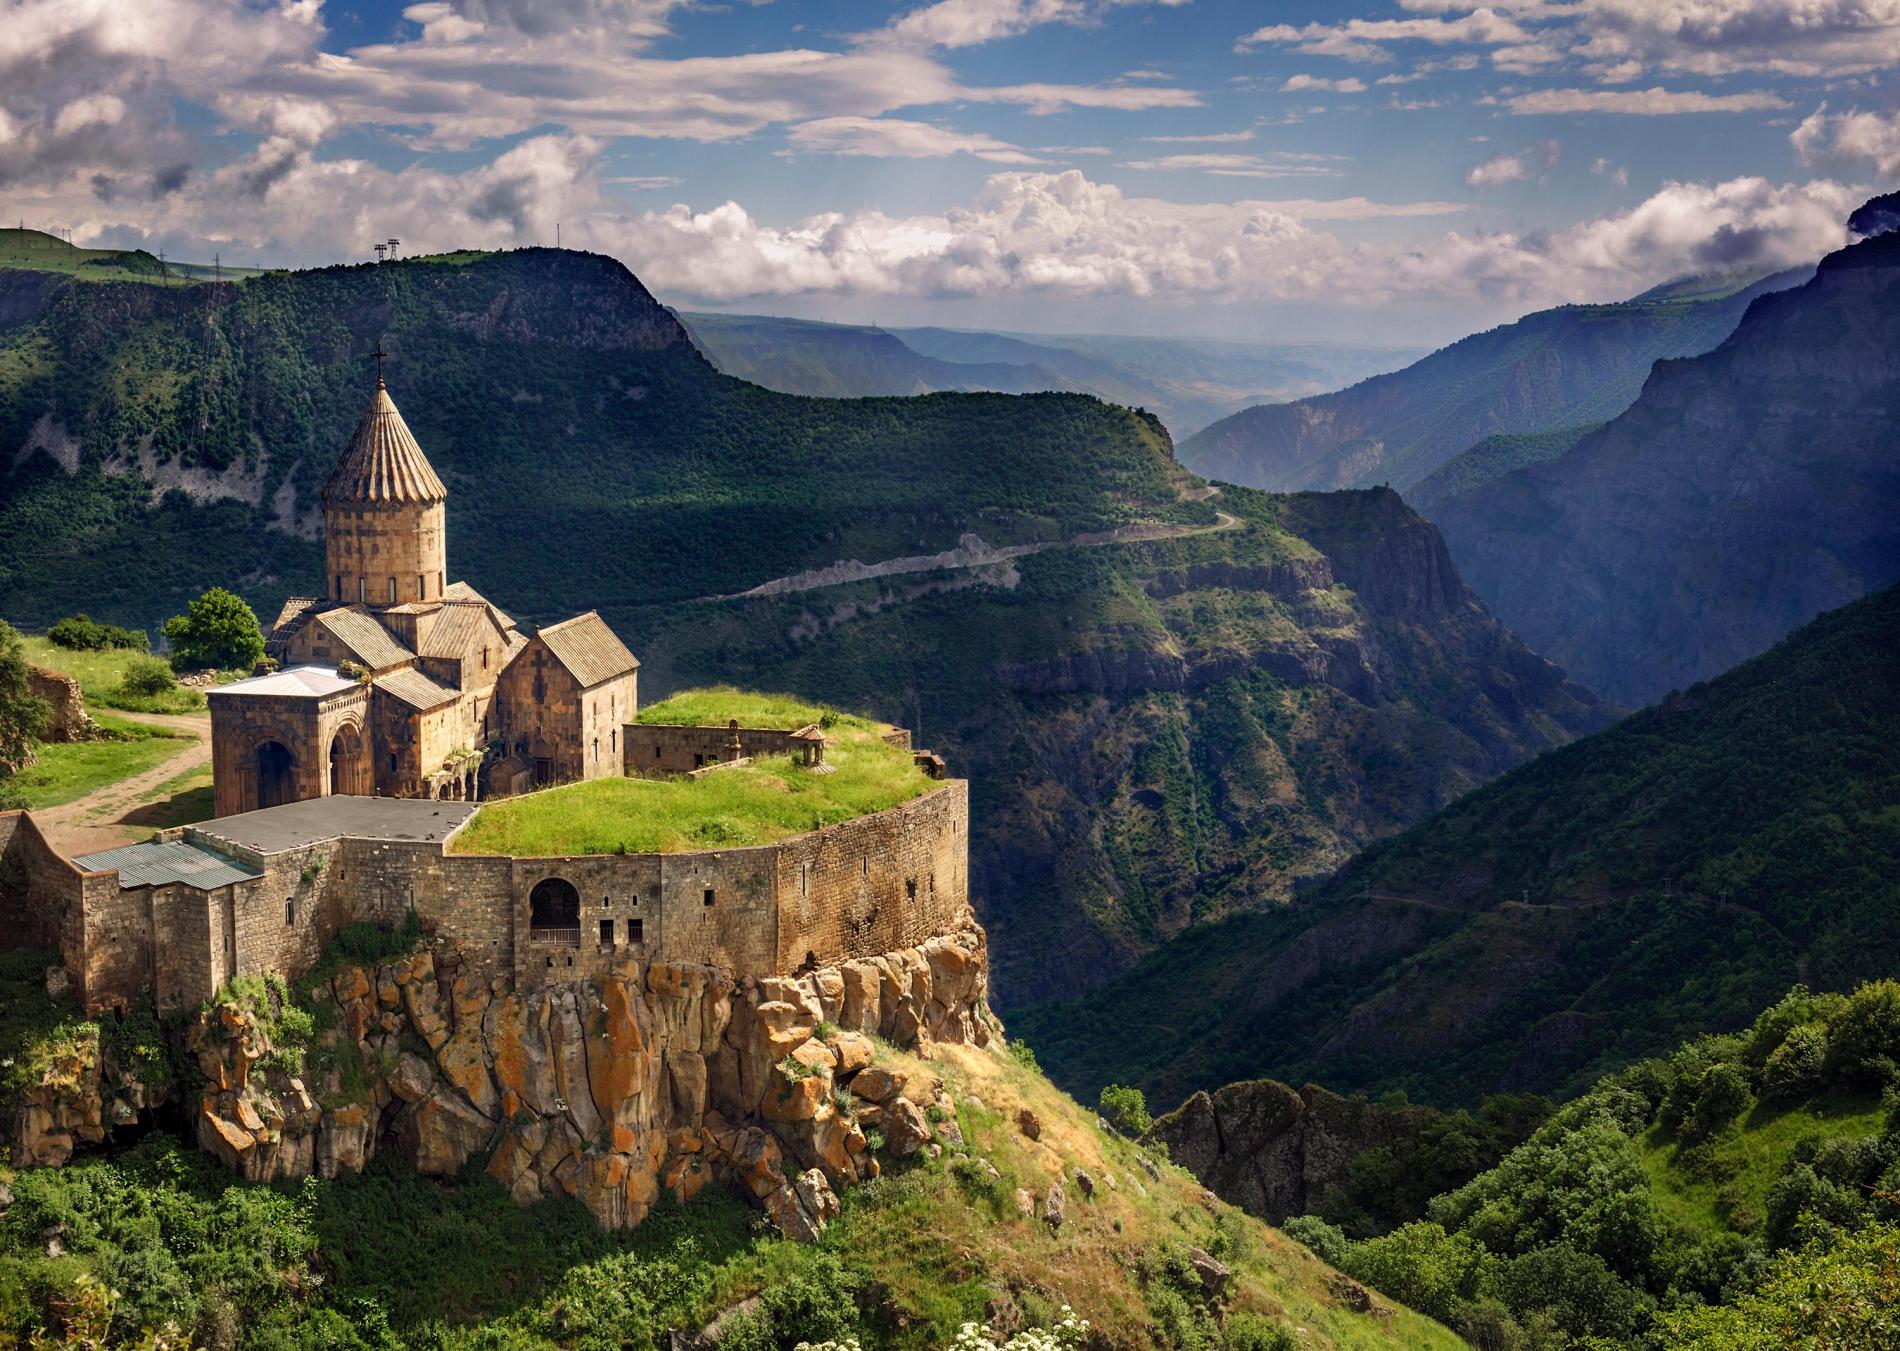 tourism statistics of armenia